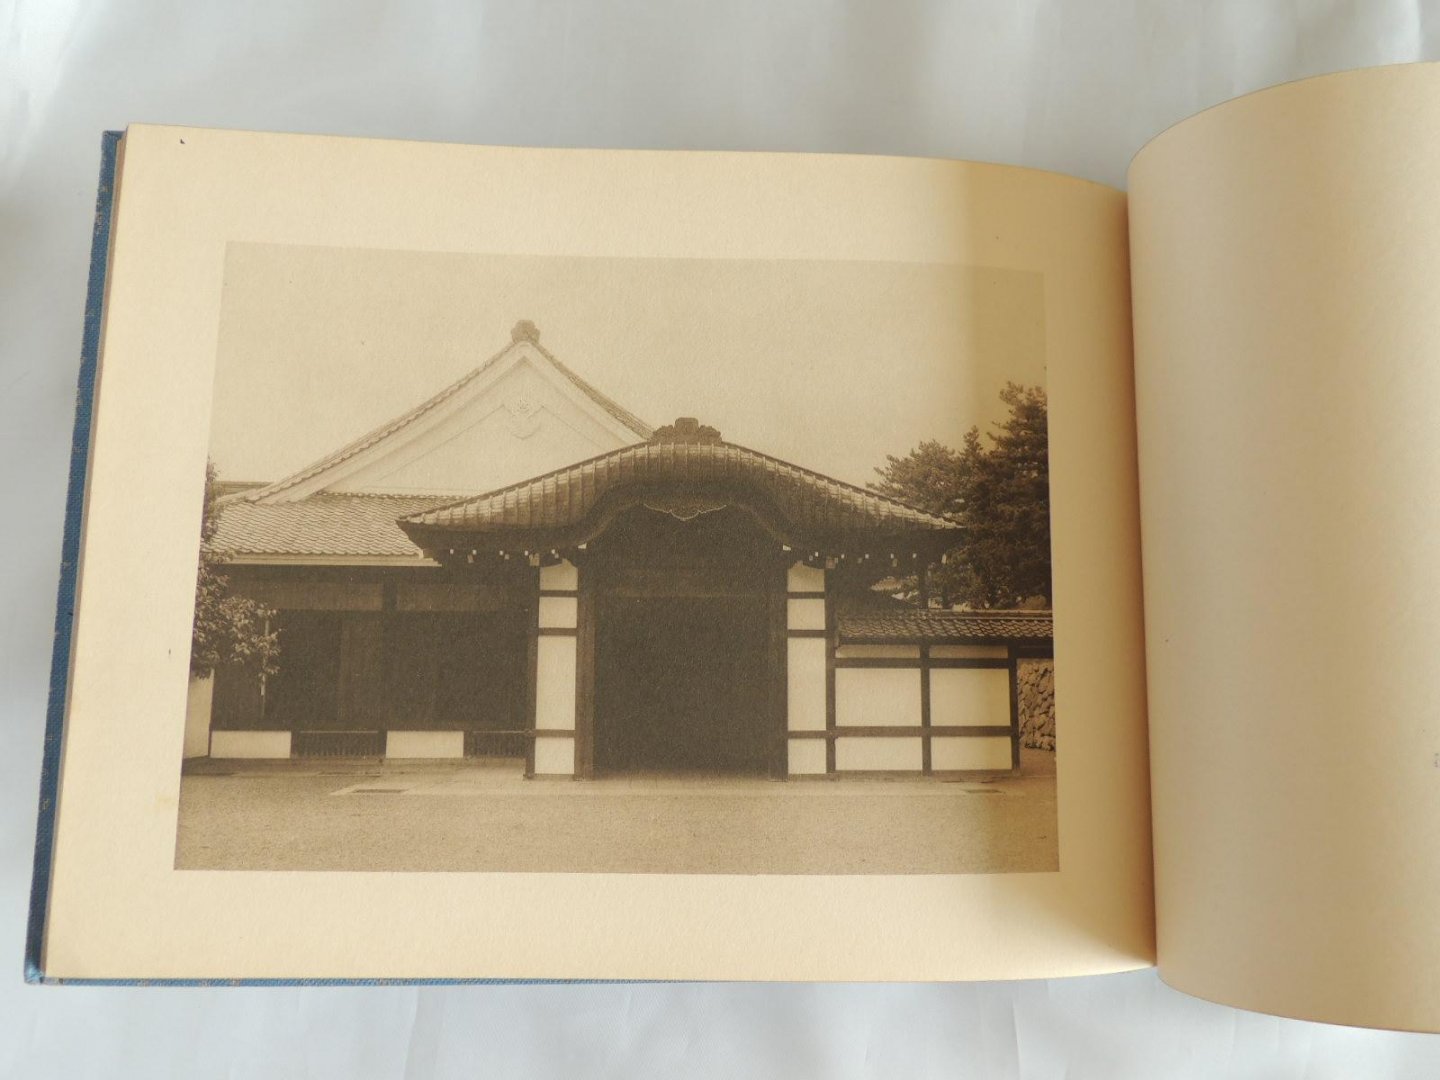  - An Art Album of the Nagoya Castle